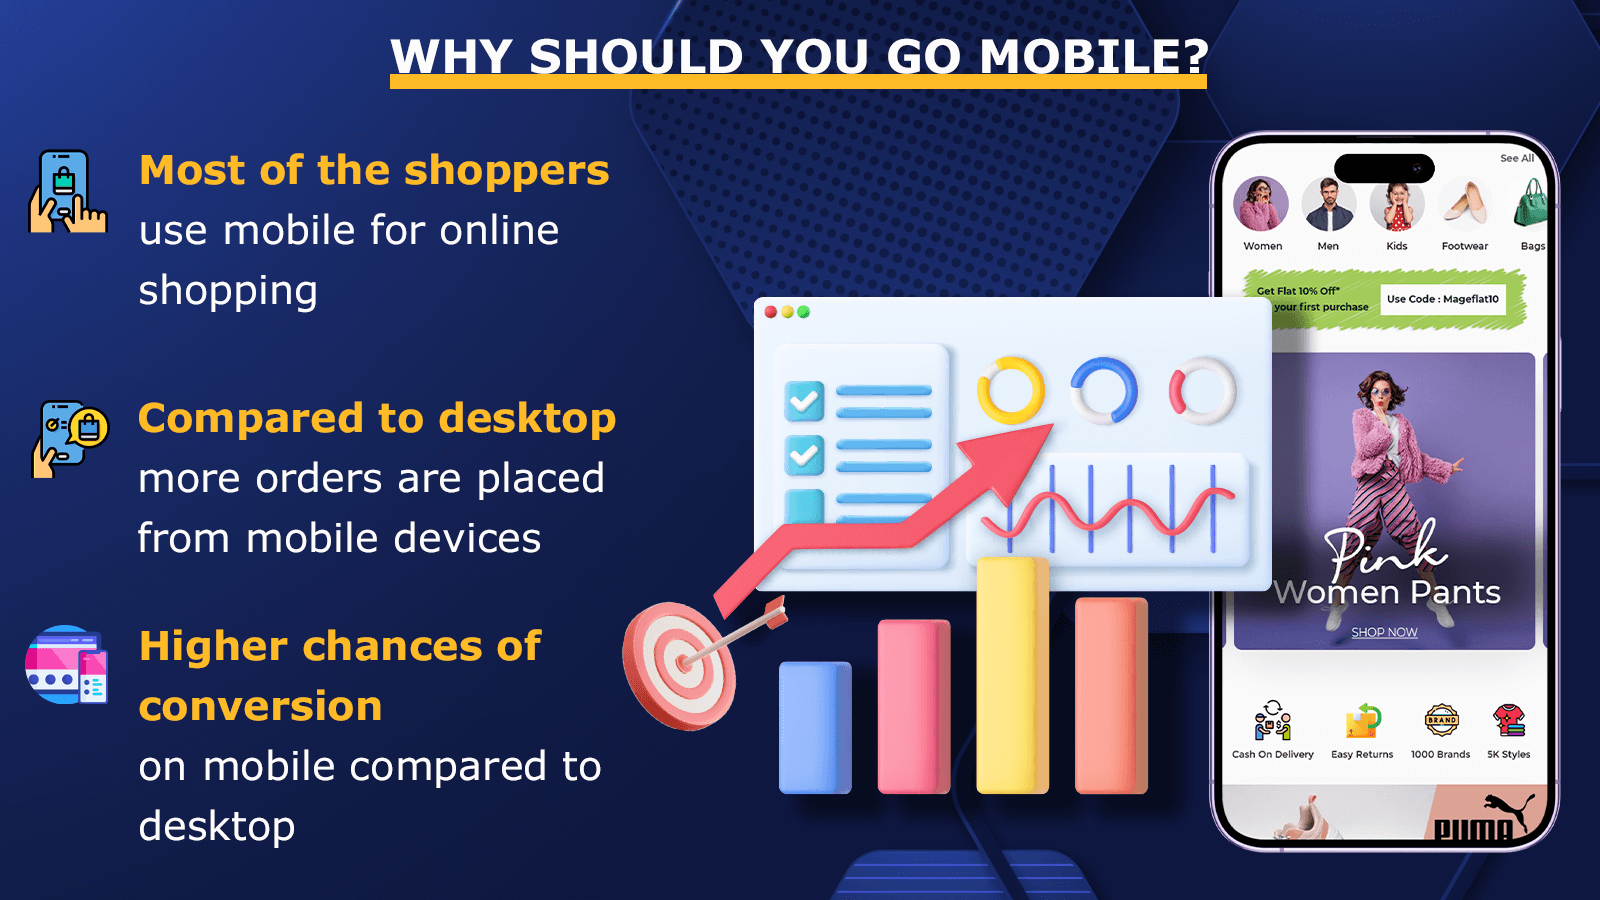 Mobile shopping conversion